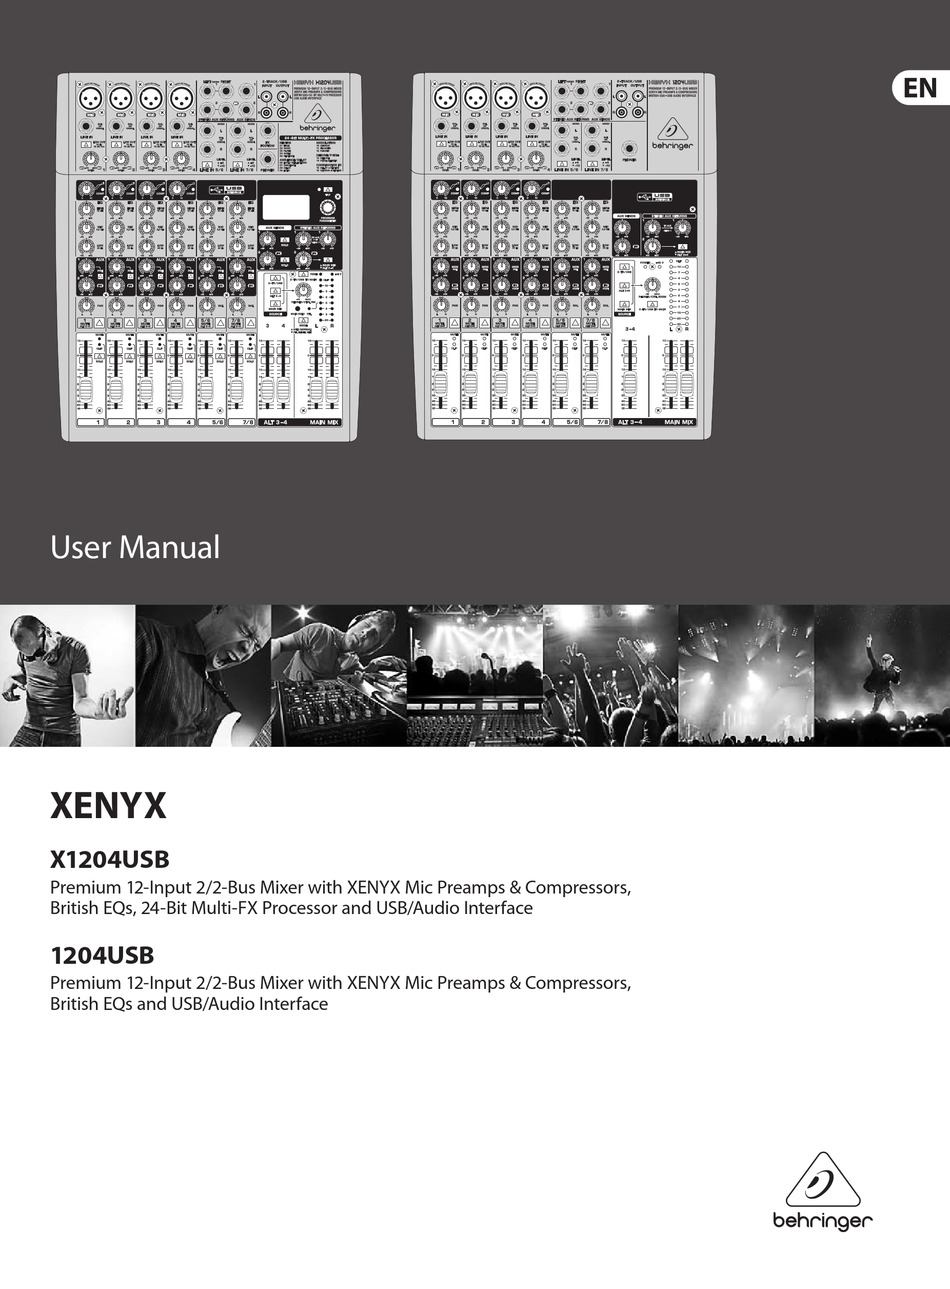 xenyx x1204usb send mic to pc